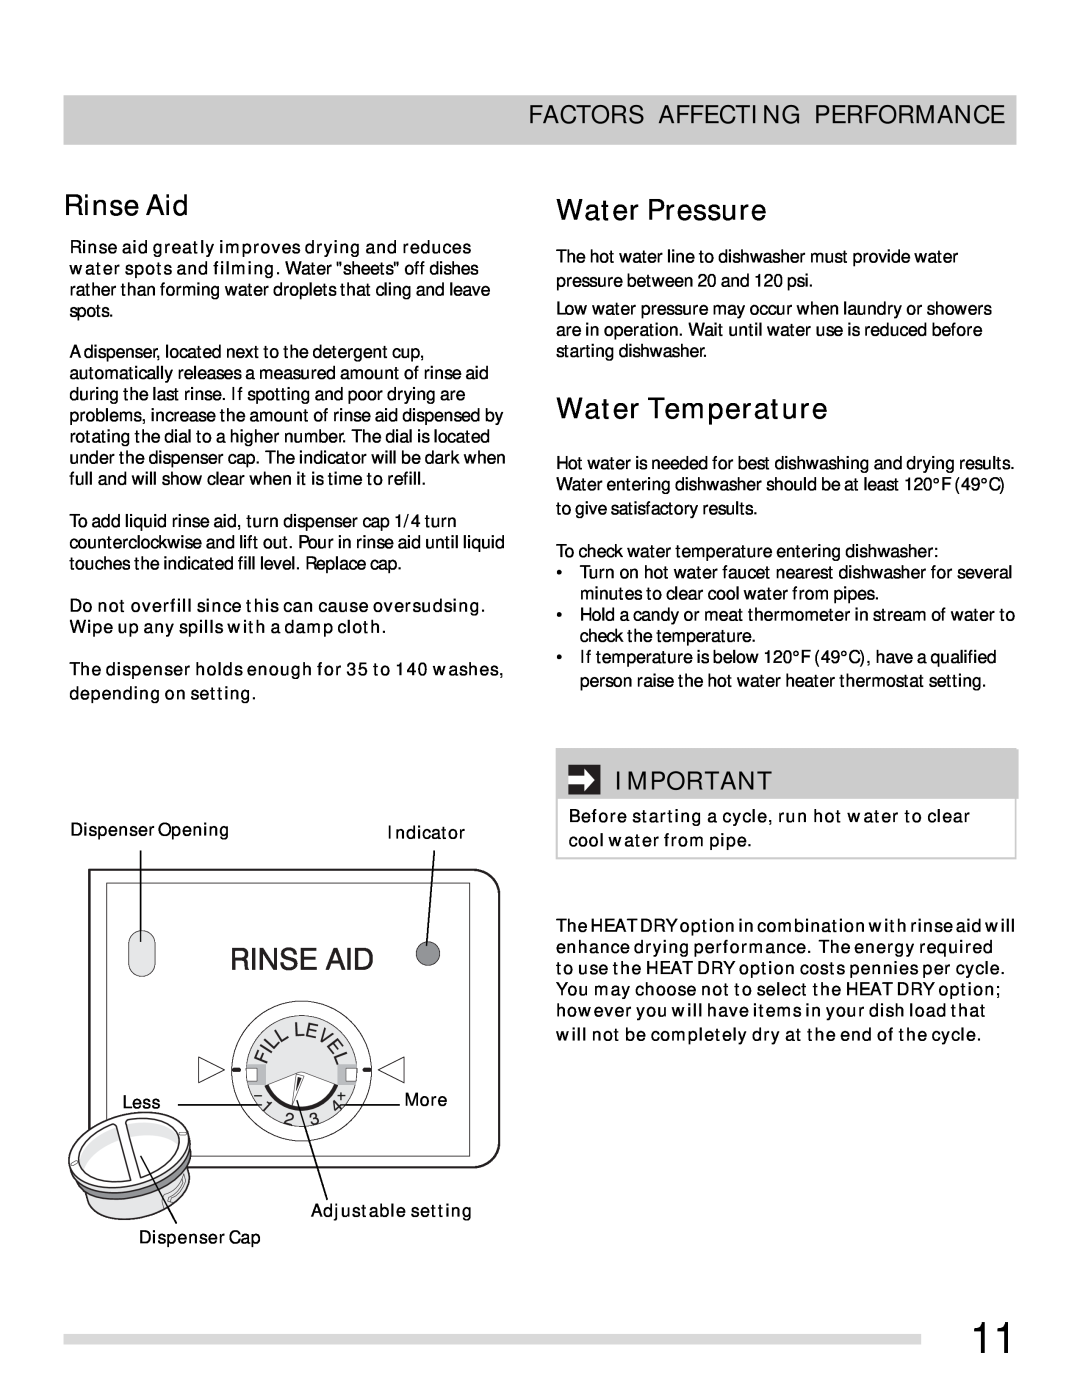 Frigidaire FFBD2407LW, FFBD2407LS, FFBD2407LQ Rinse Aid, Water Pressure, Water Temperature, Factors Affecting Performance 